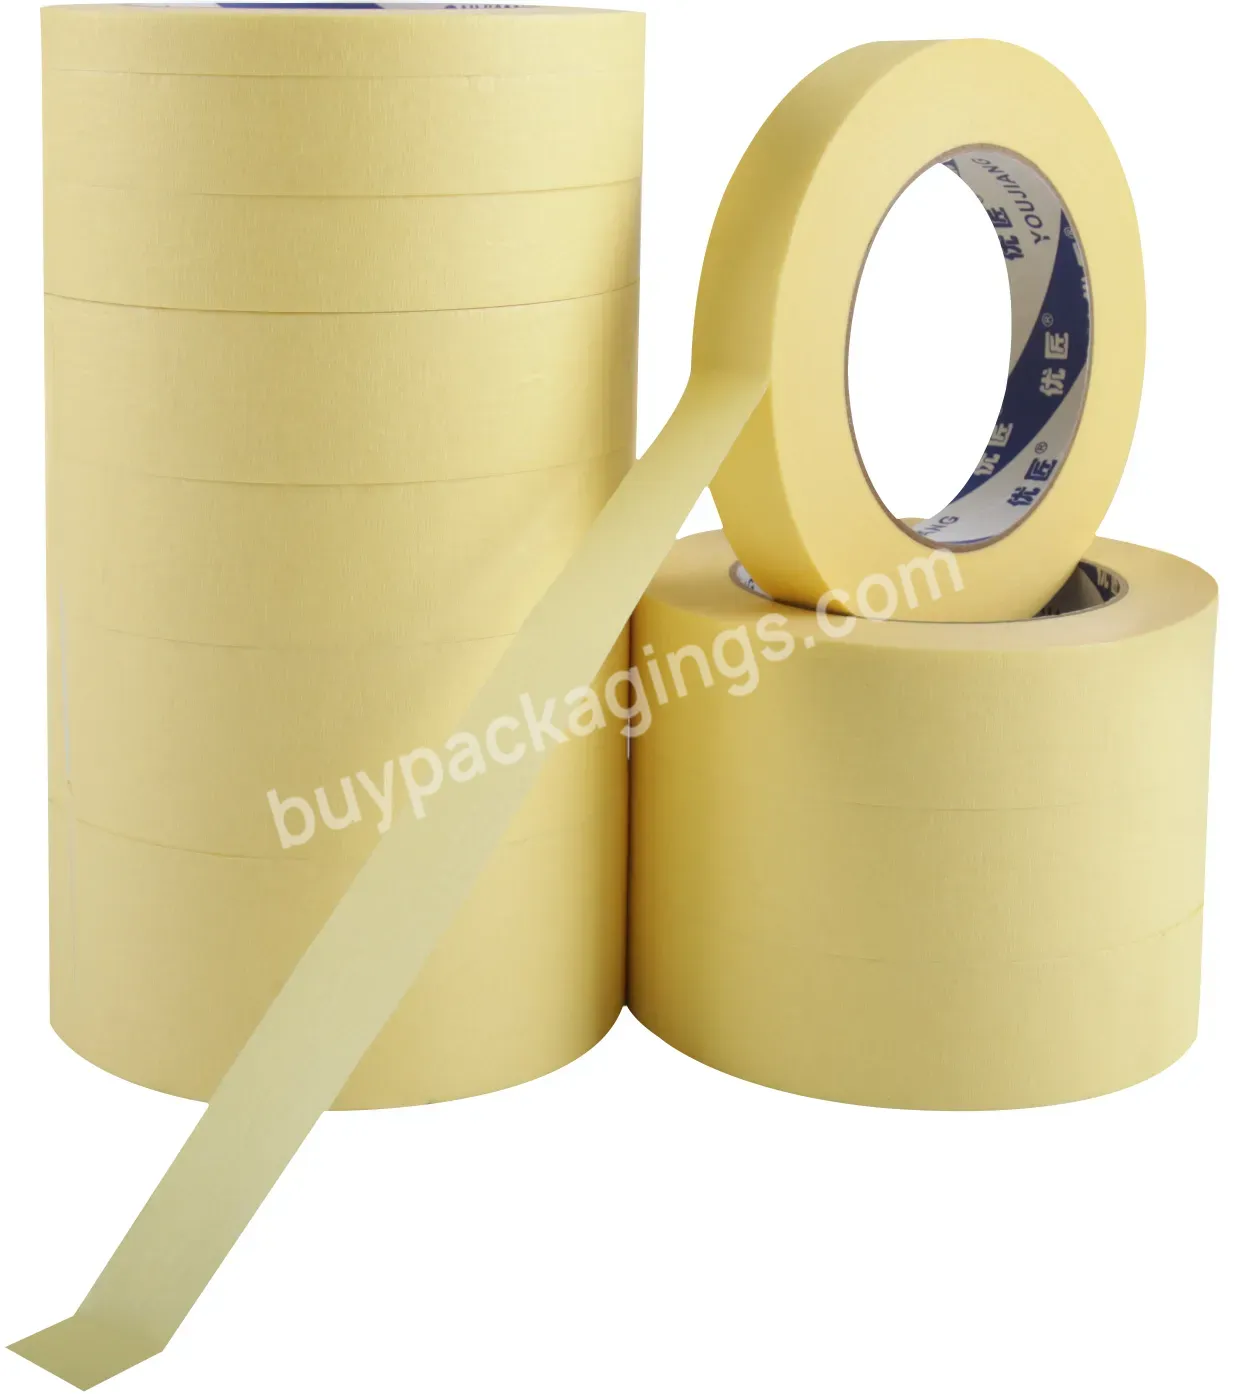 You Jiang Rubber Painter Painters Masking 120u Yellow Uv Resistance Crepe Paper Tape - Buy Automotive Masking Auto Paint Tape,Masking Tape,Wall Paint Masking Tape.